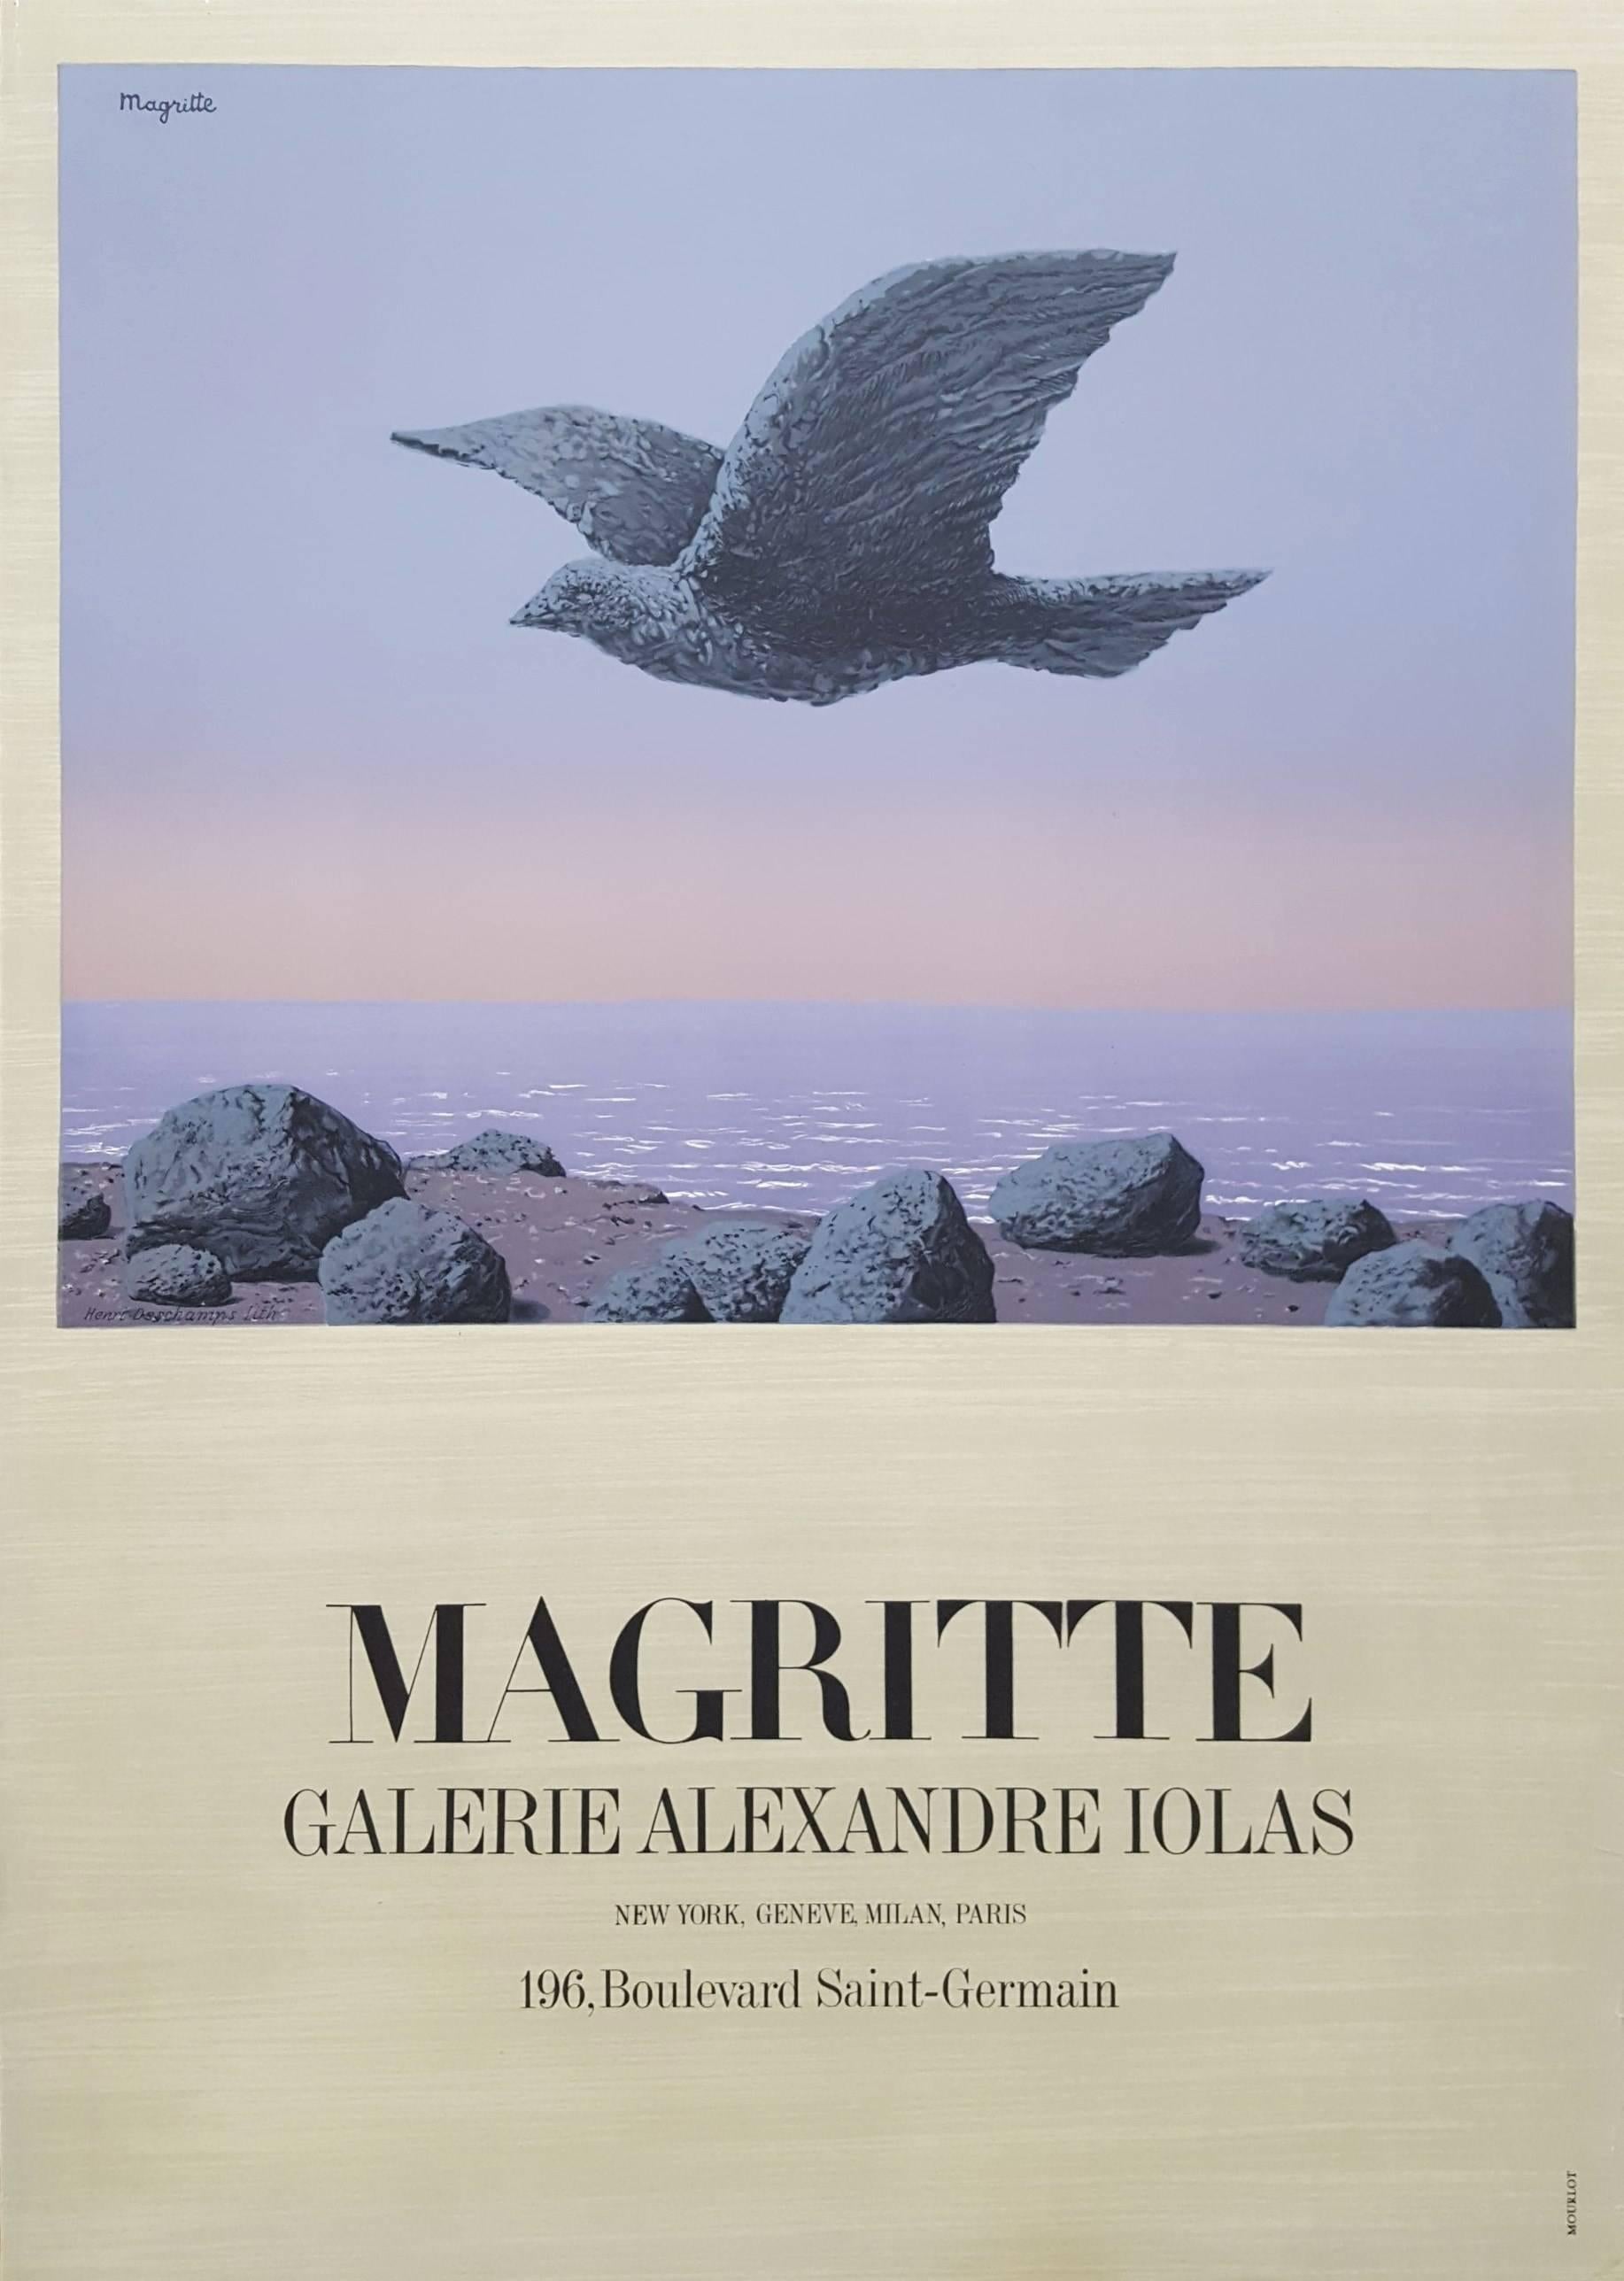 (after) René Magritte Animal Print - Galerie Alexandre Iolas